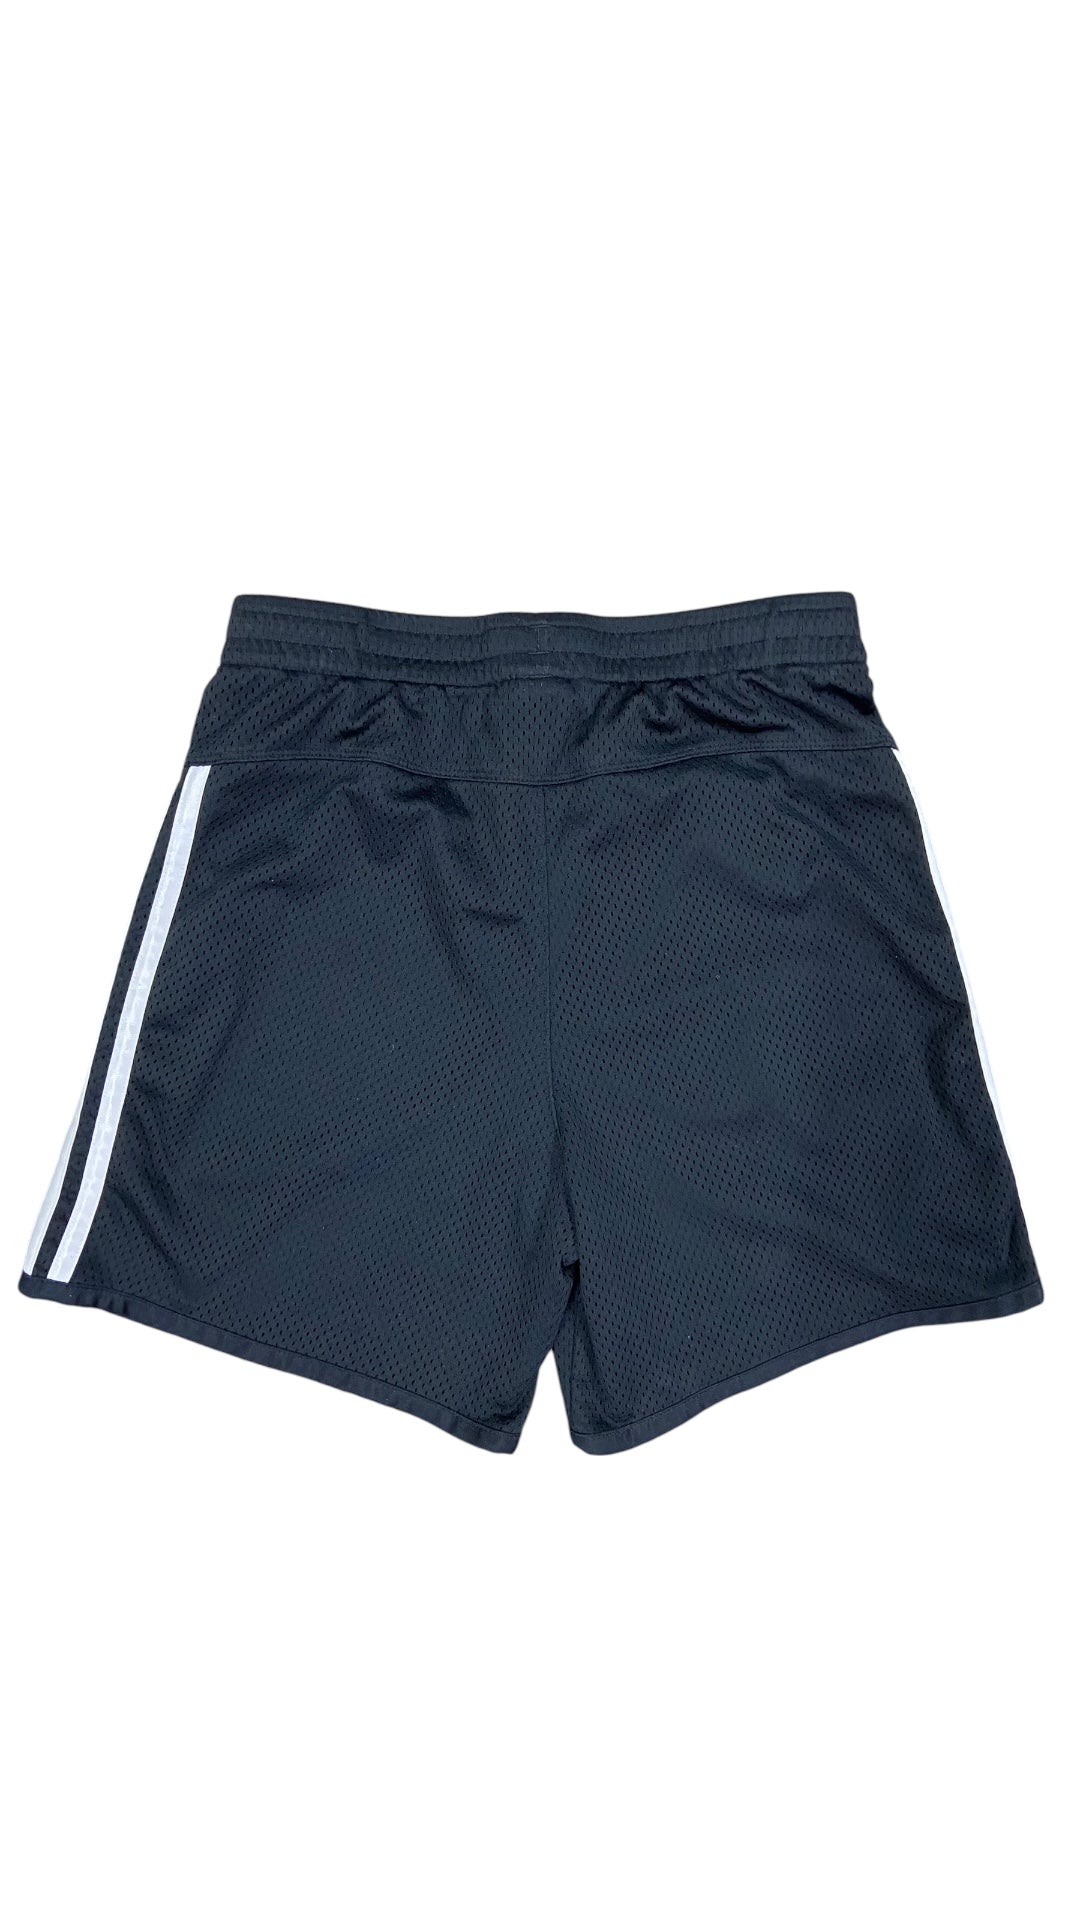 Wmns Adidas Basketball 3 Stripe Black/White Shorts Sz XL